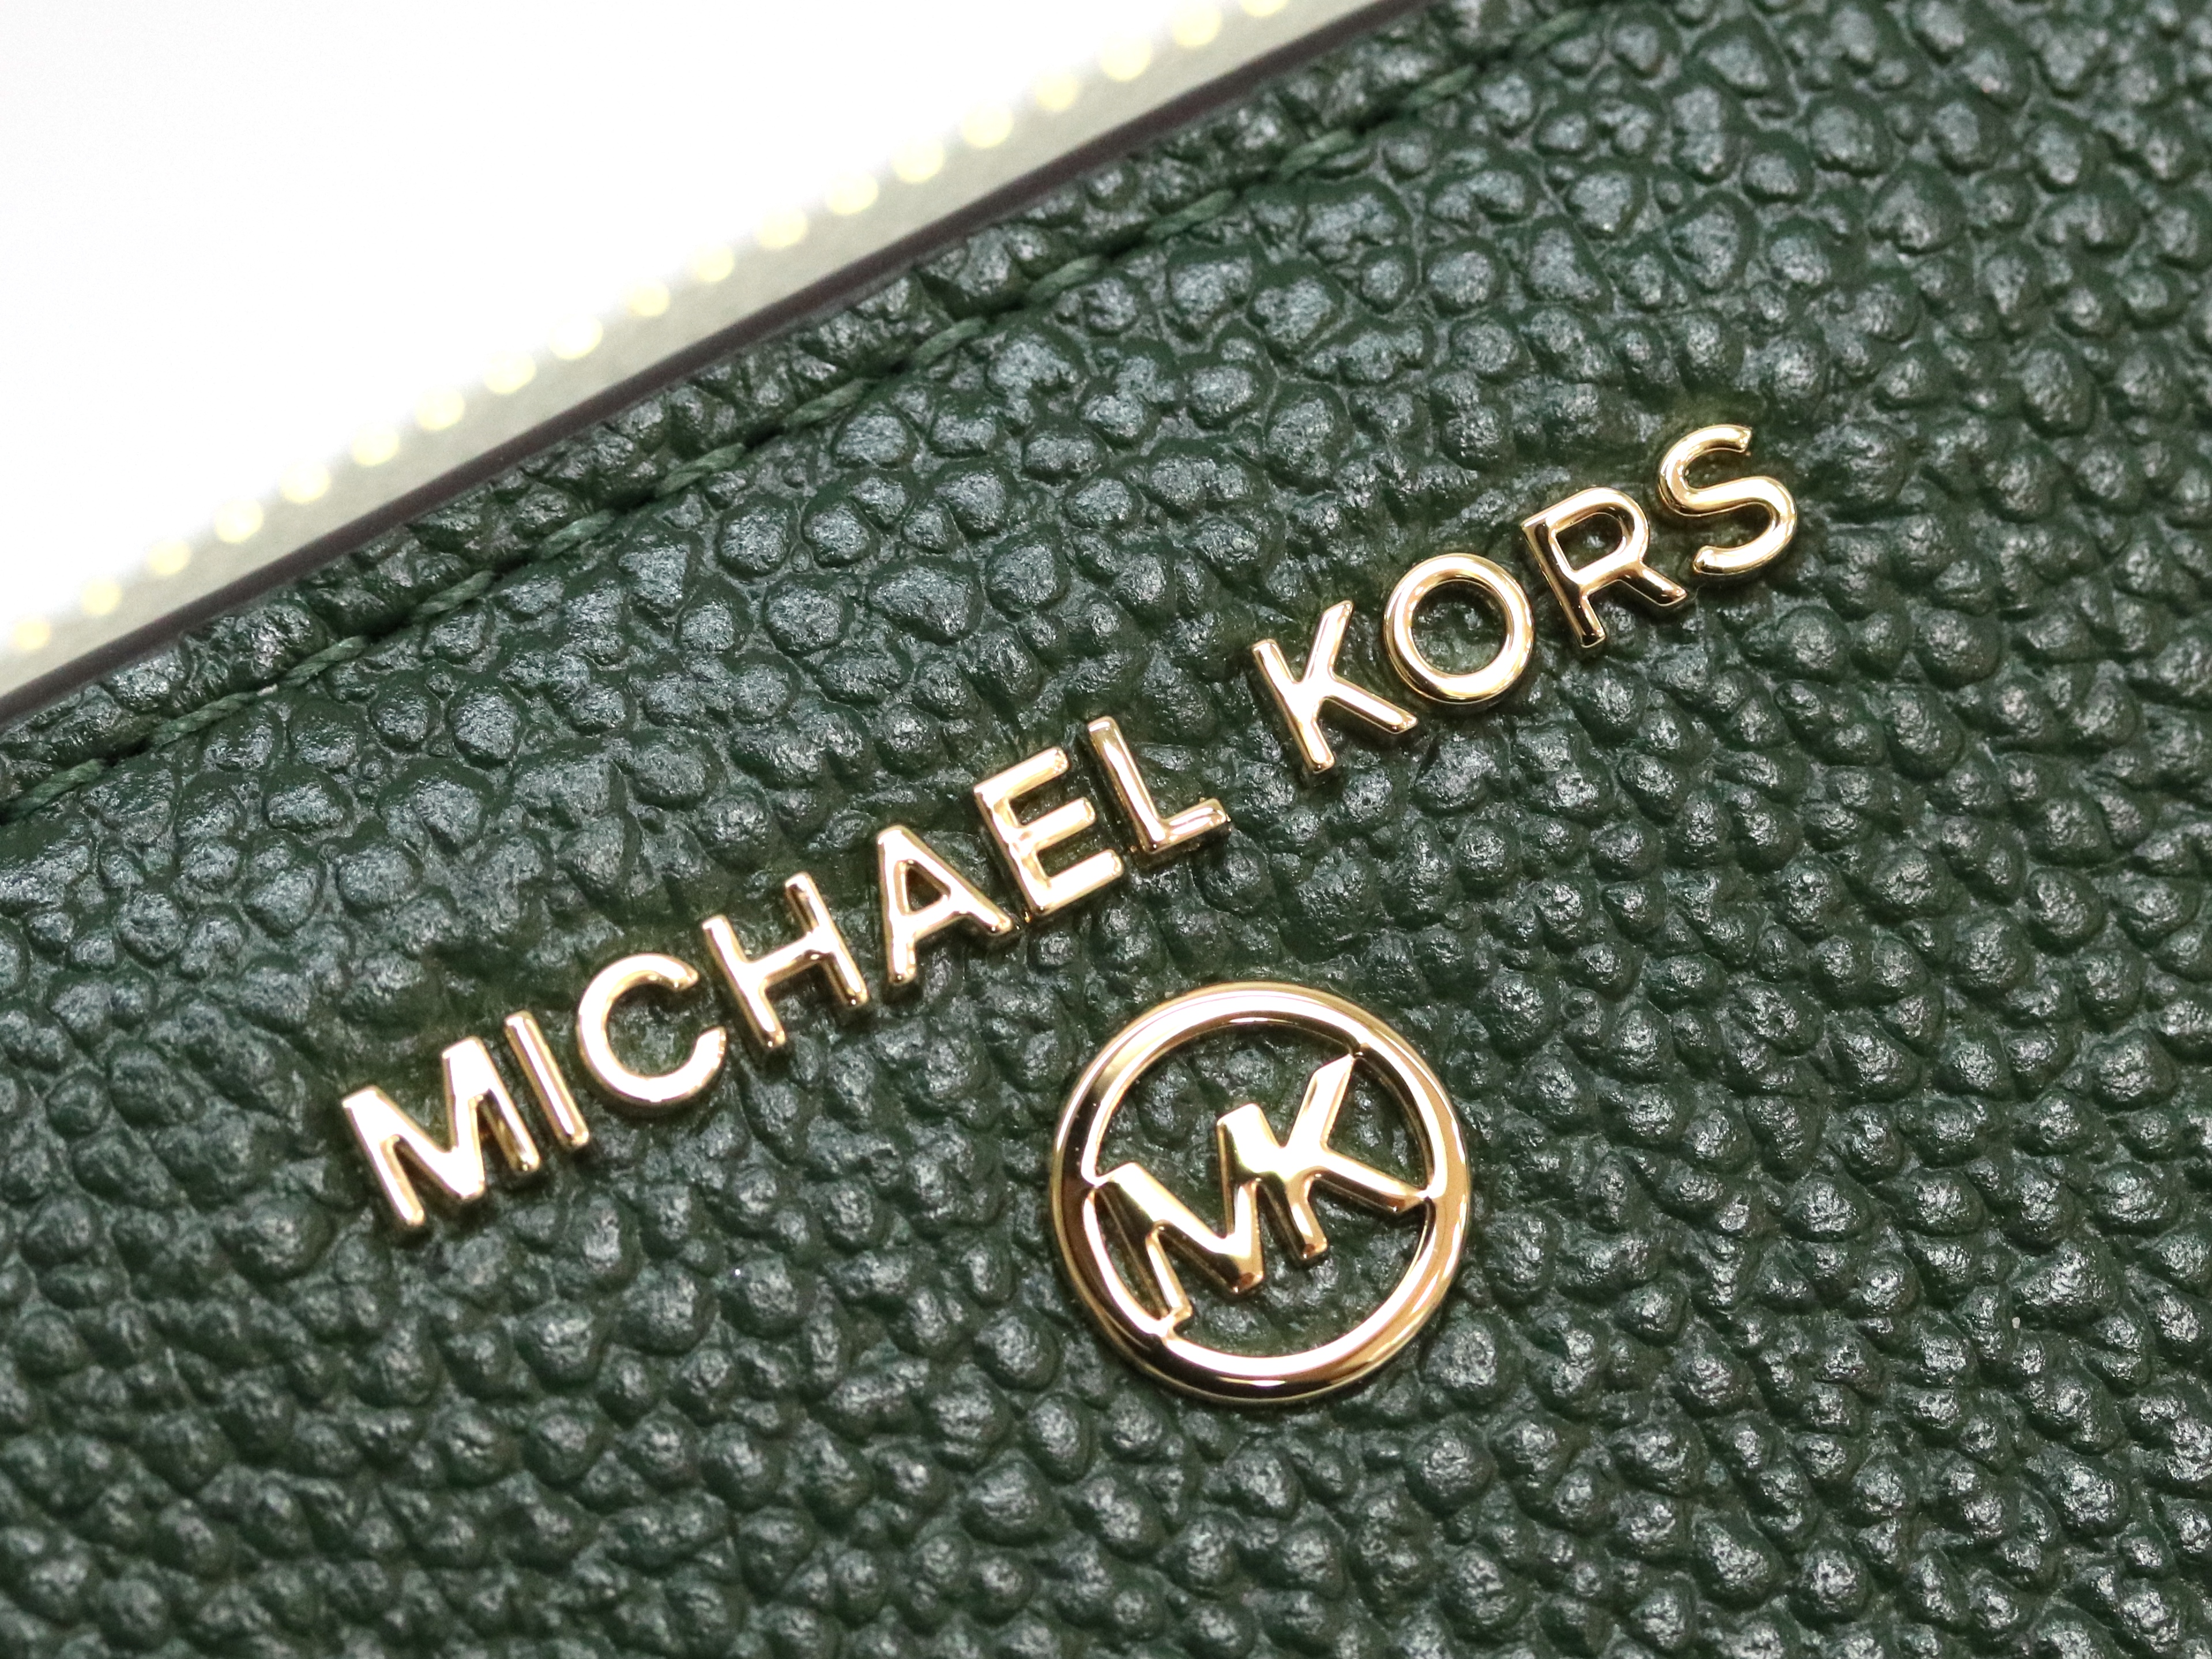 Jet Set Charm' wallet on chain Michael Michael Kors - InteragencyboardShops  Japan